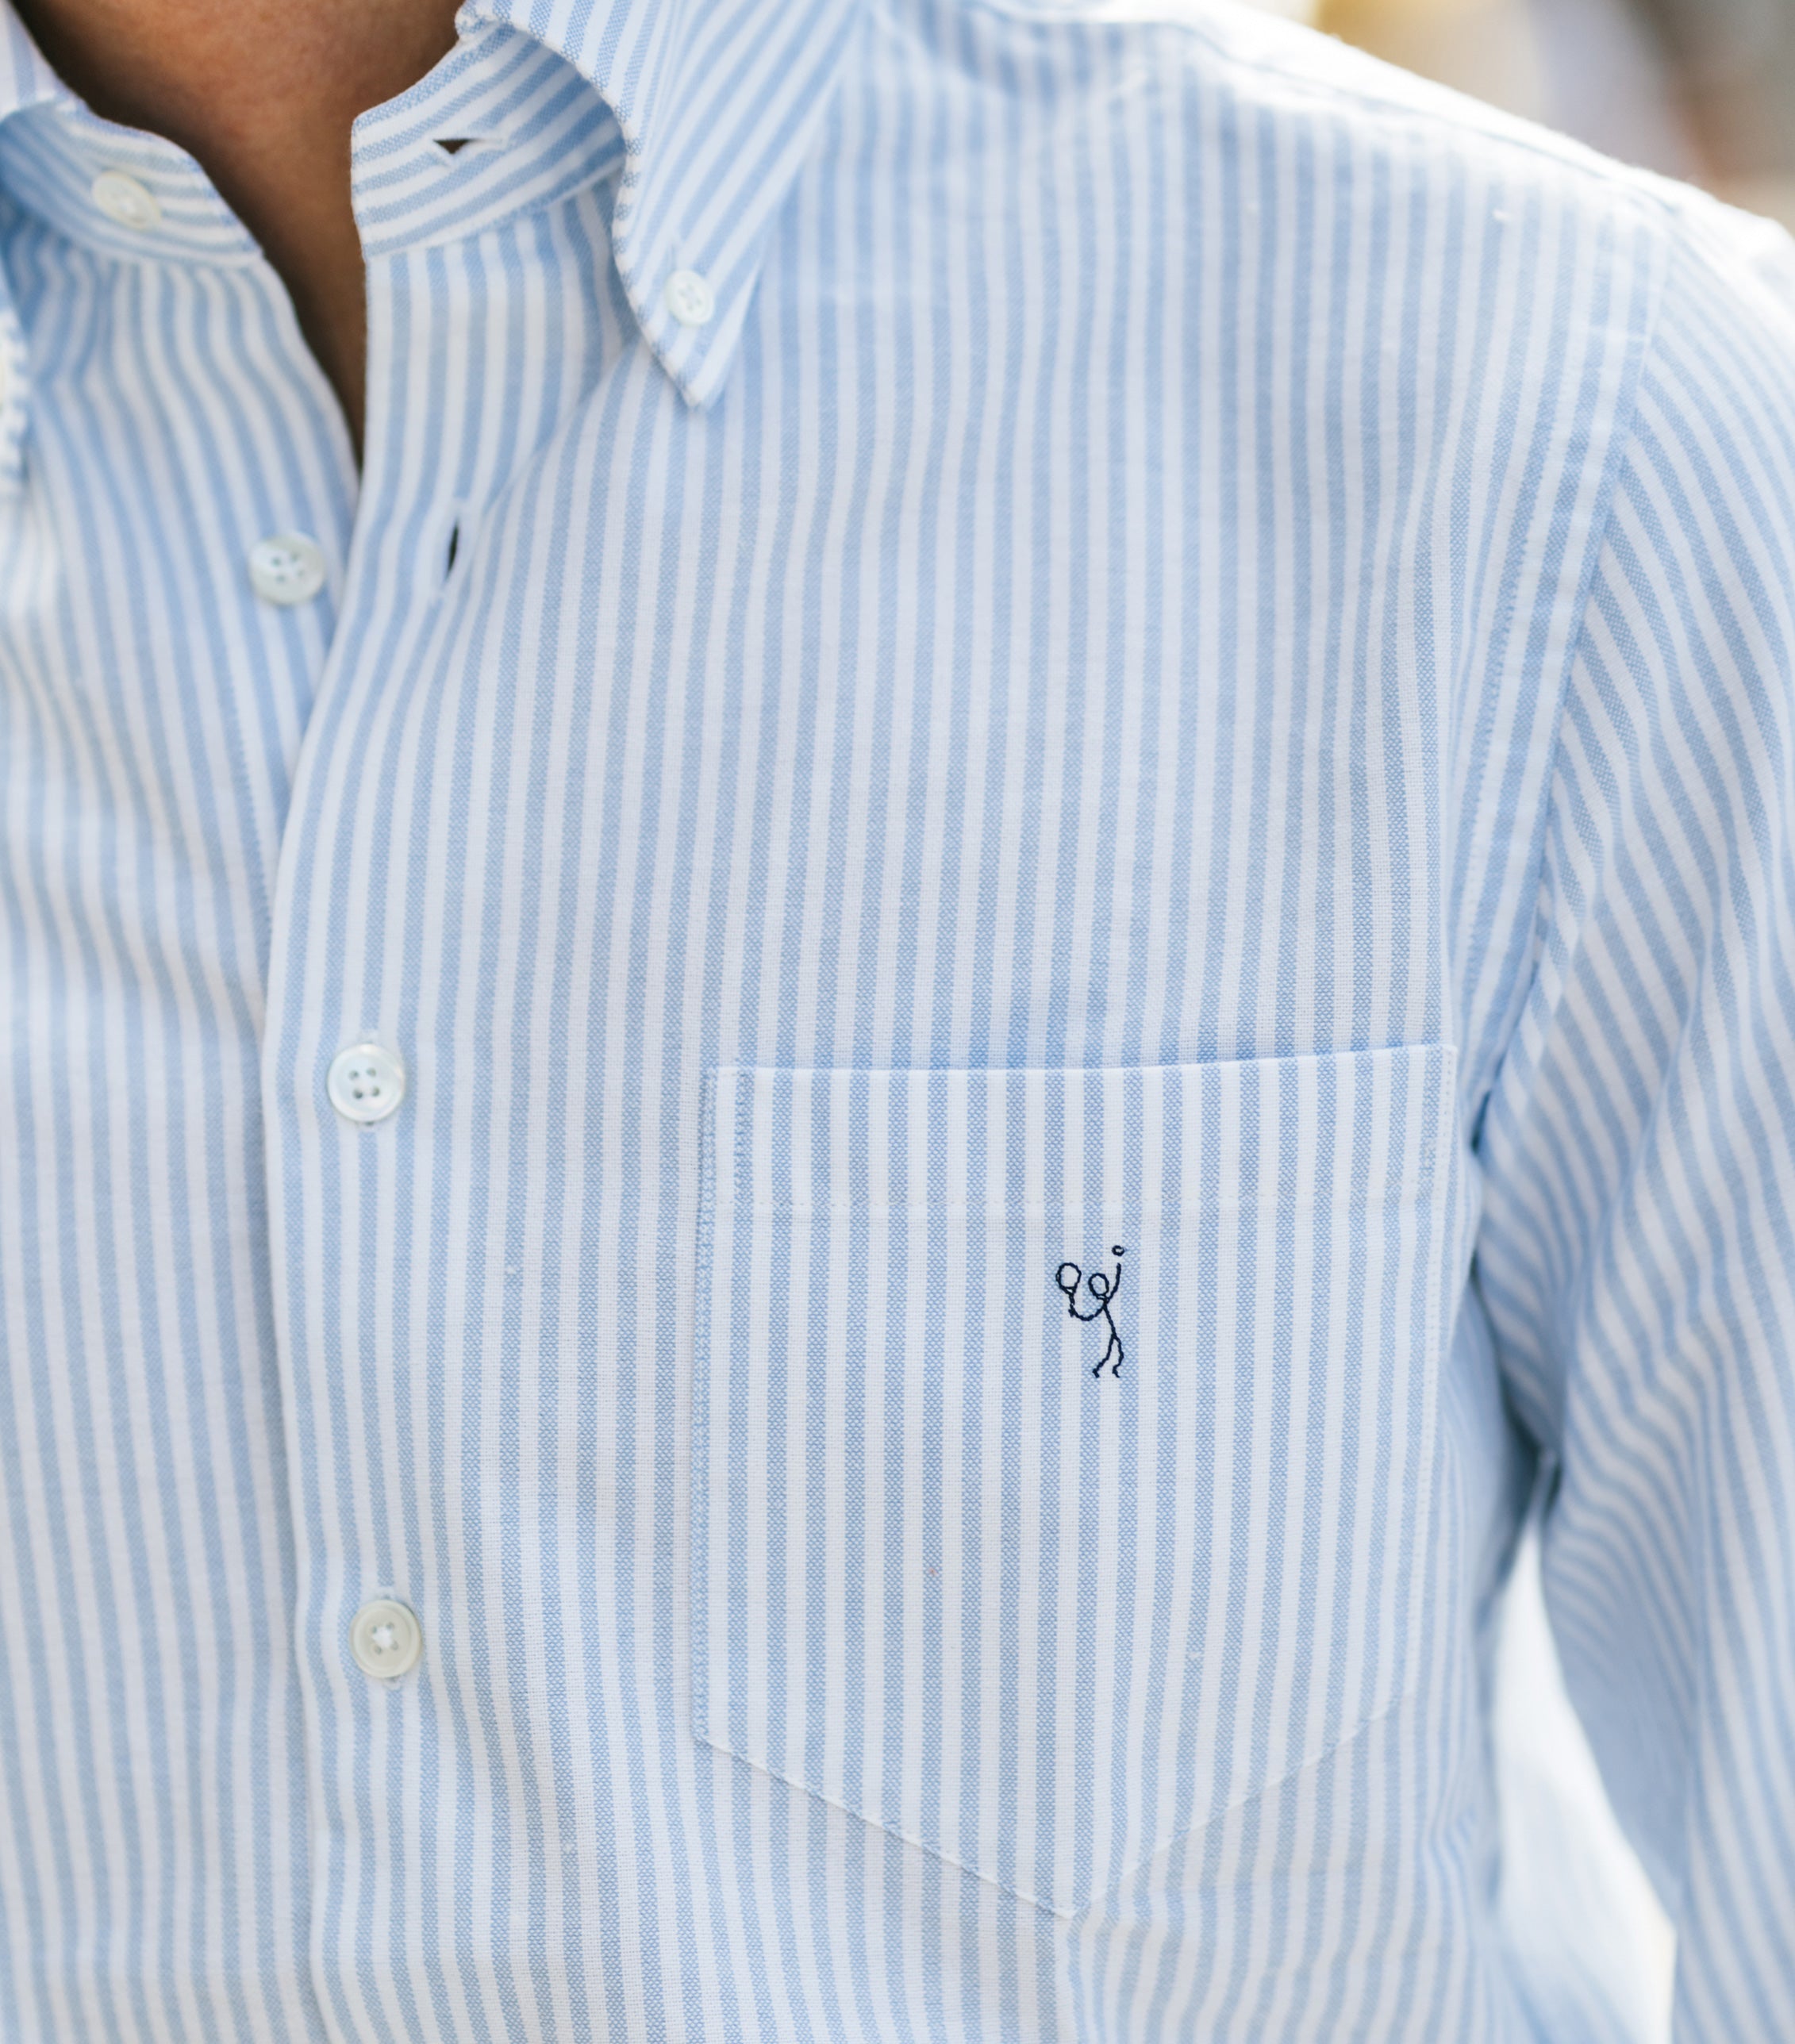 Jerry Light Blue Striped Oxford Shirt